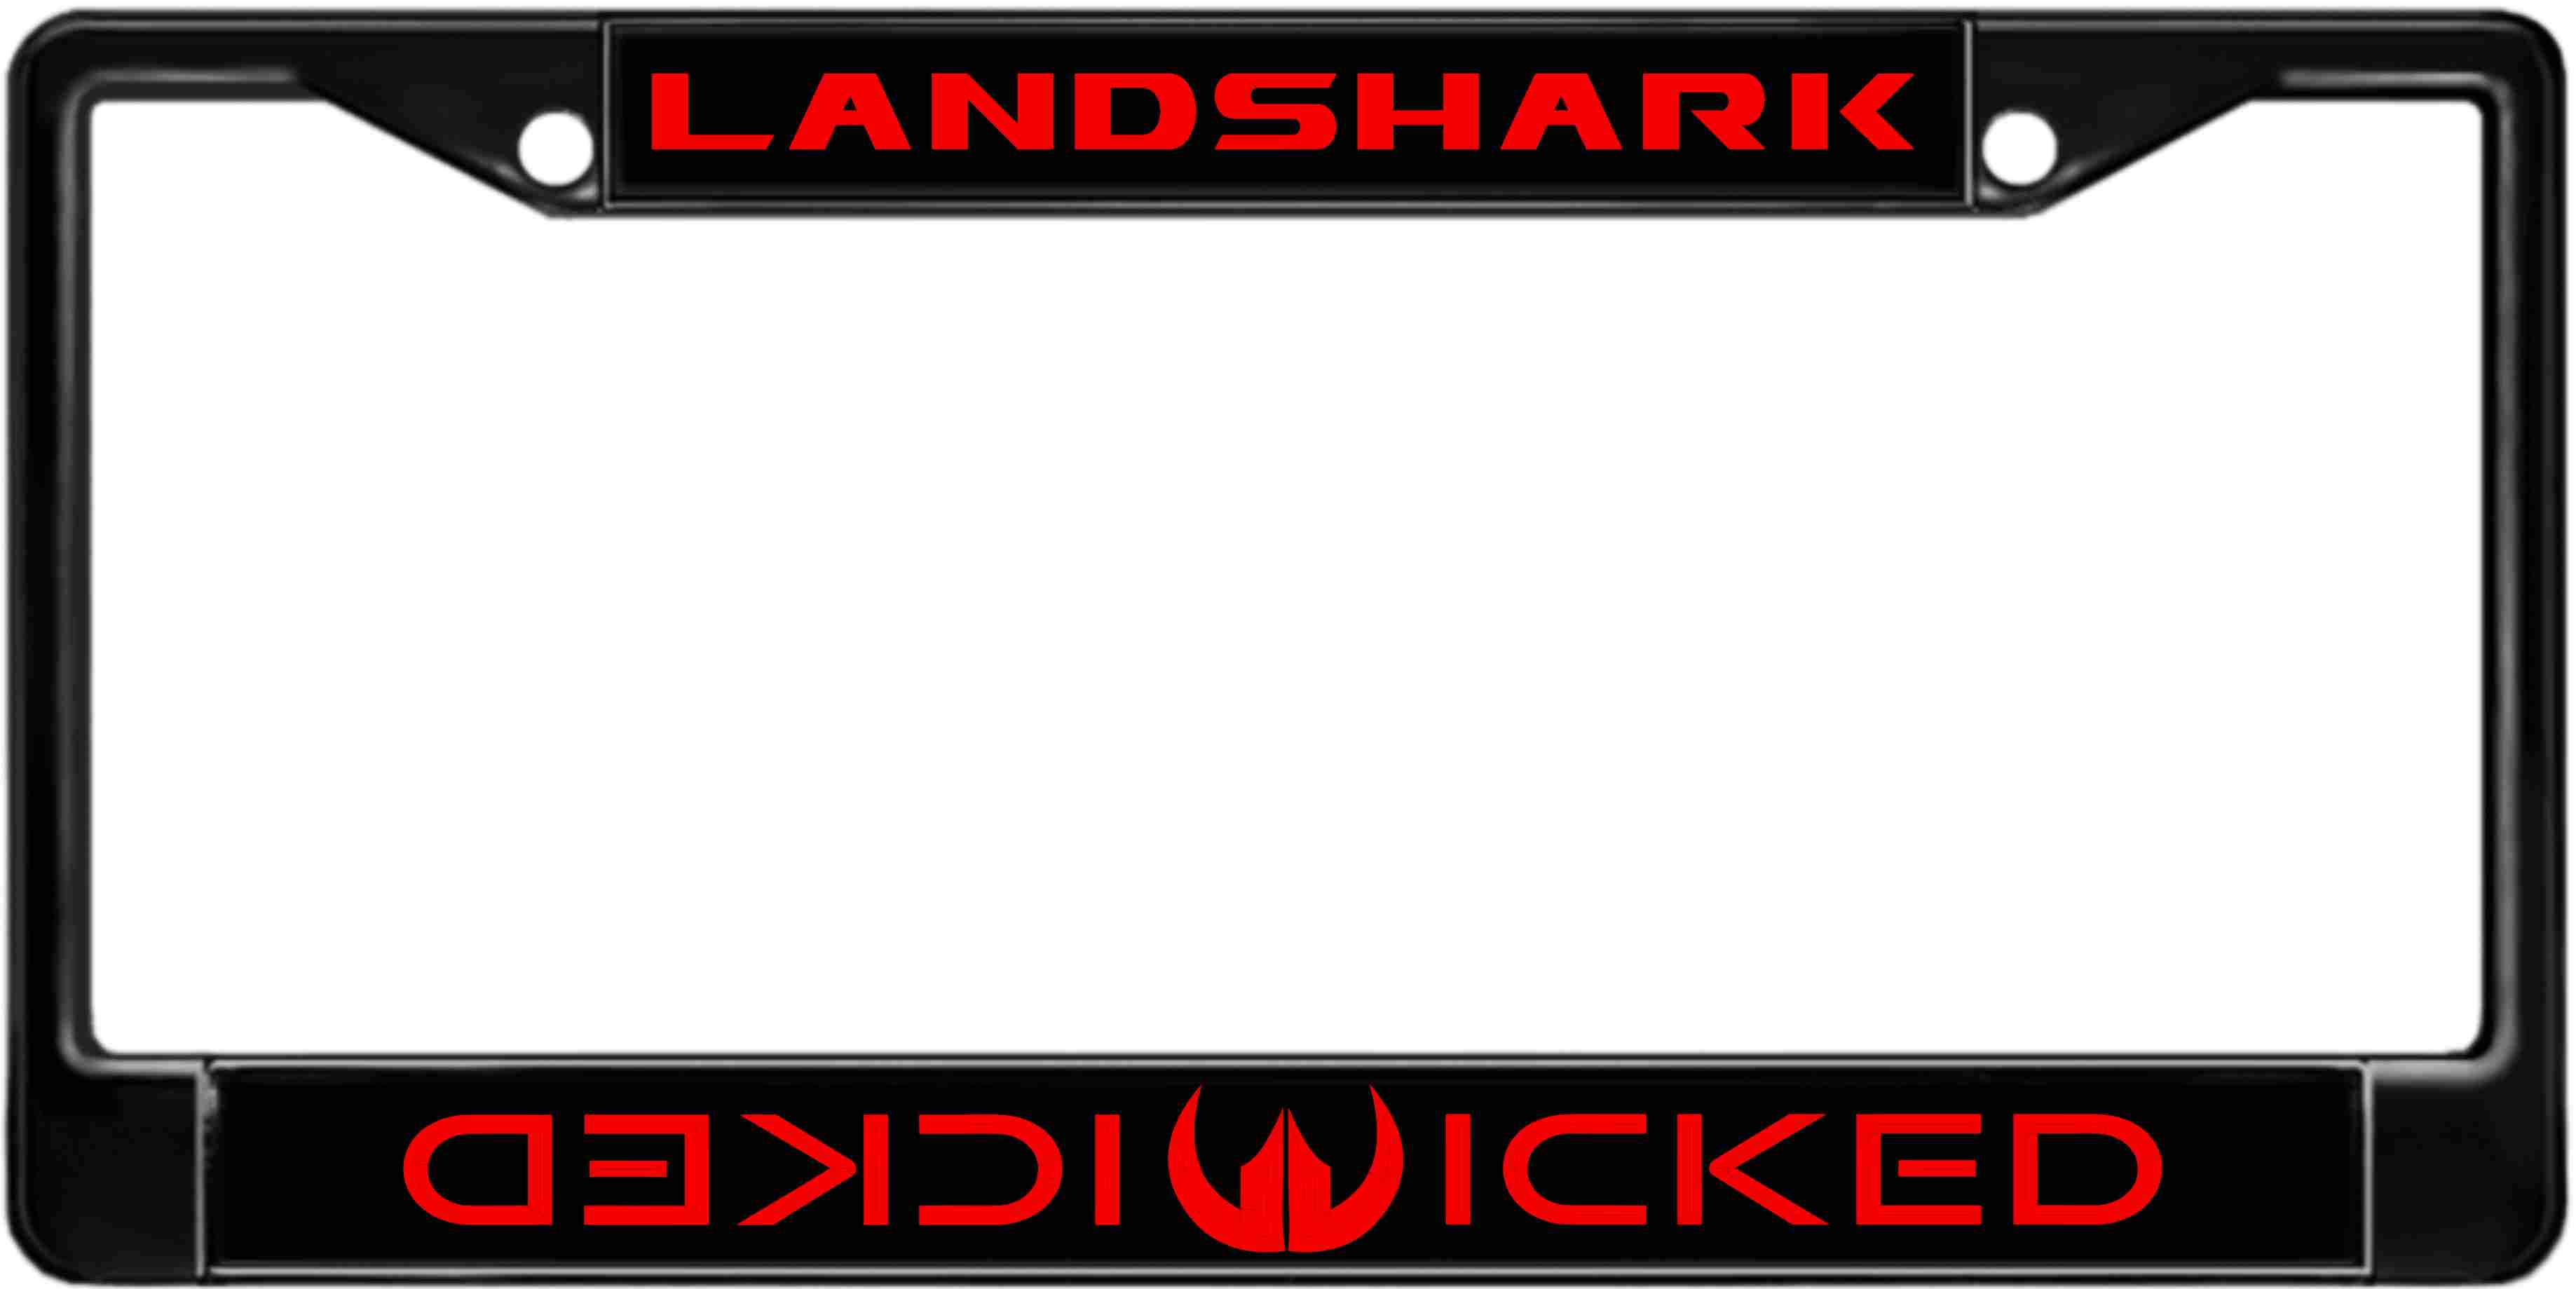 Landshark - custom metal license plate frame.